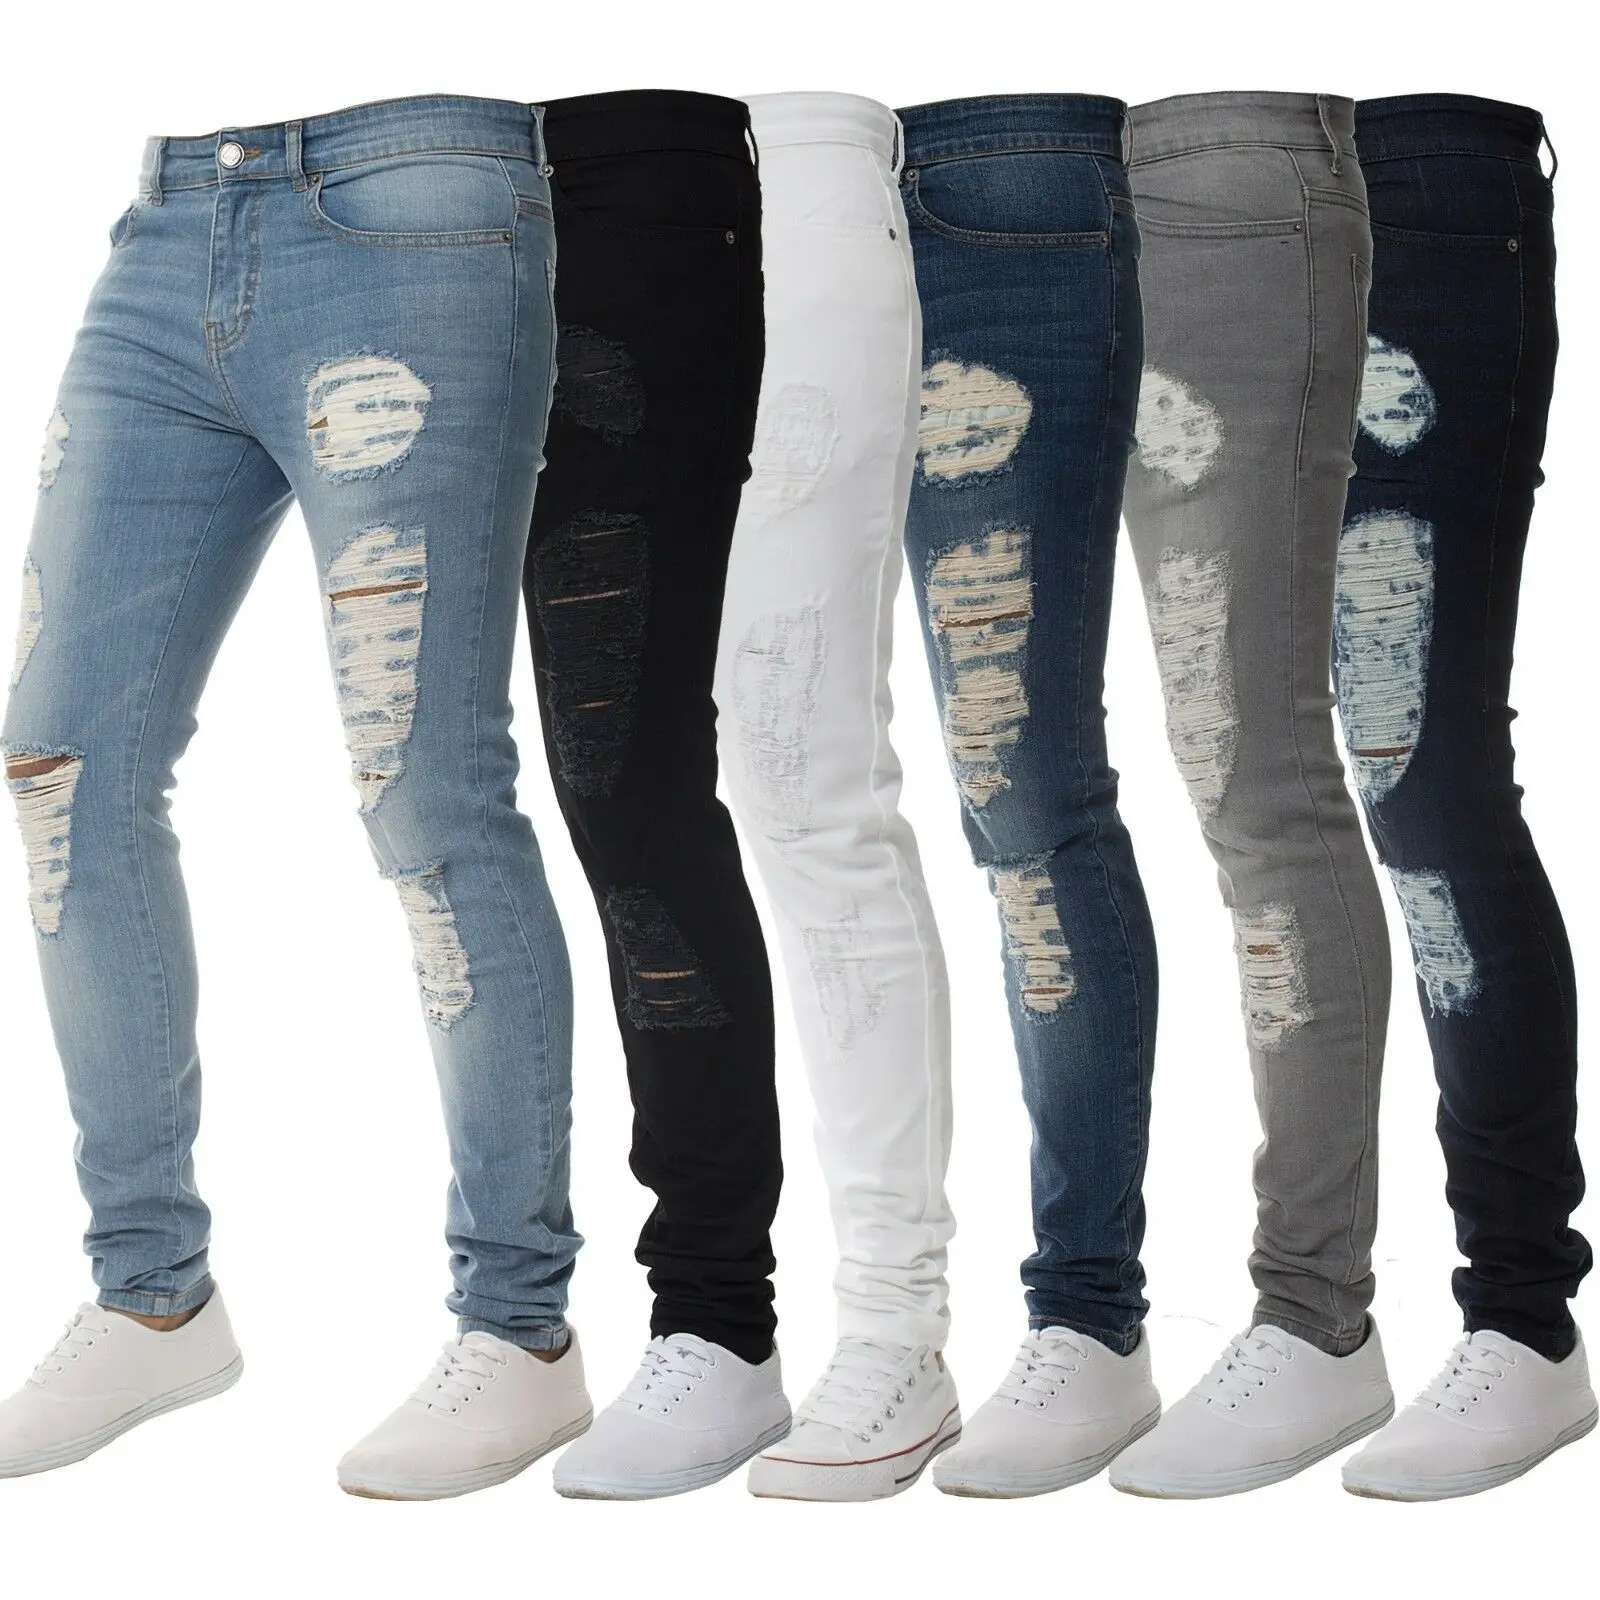 Hombre Super Stretch Skinny Pantalones Vaqueros Rasgados Azul Denim Negro Buy Mens Blank Denim Jeans Denim Blue Color Custom Branded Jeans Denim Product On Alibaba Com